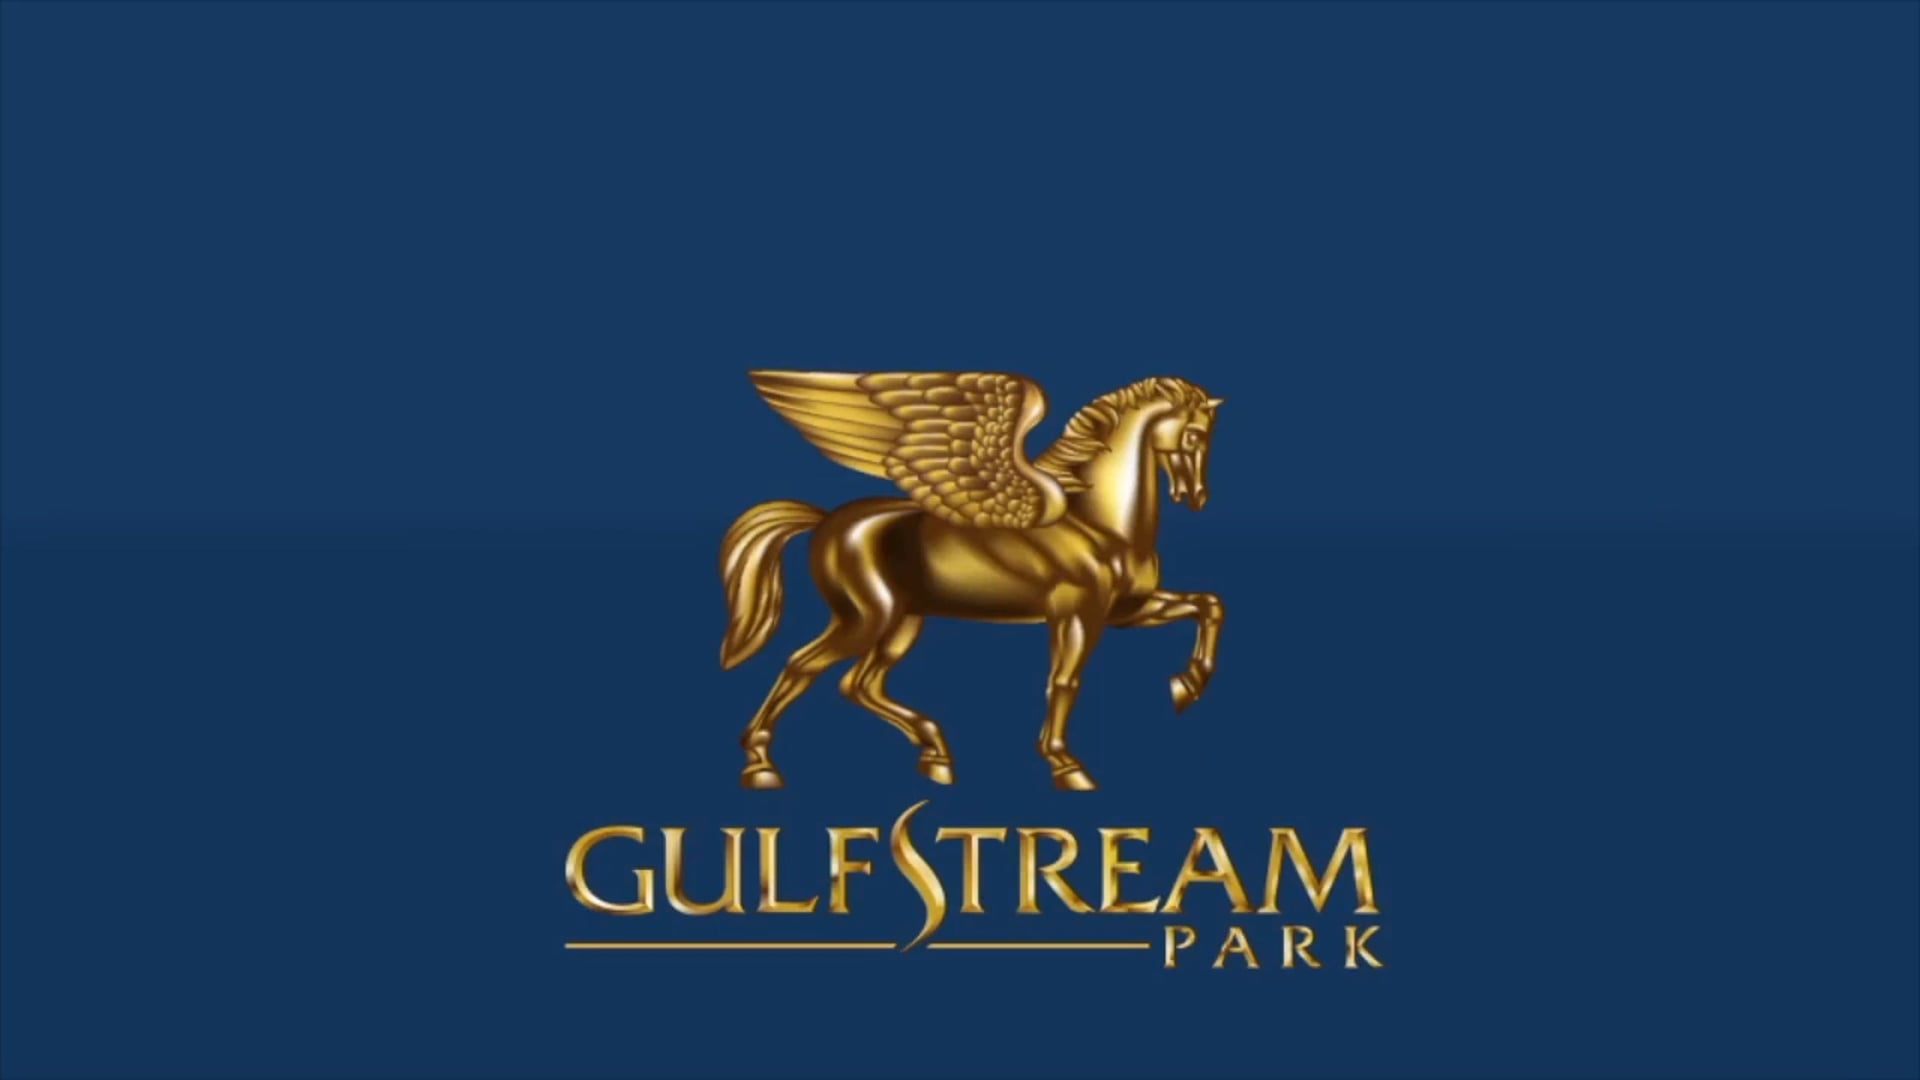 Gulfstream Park - Branding 3D Animation